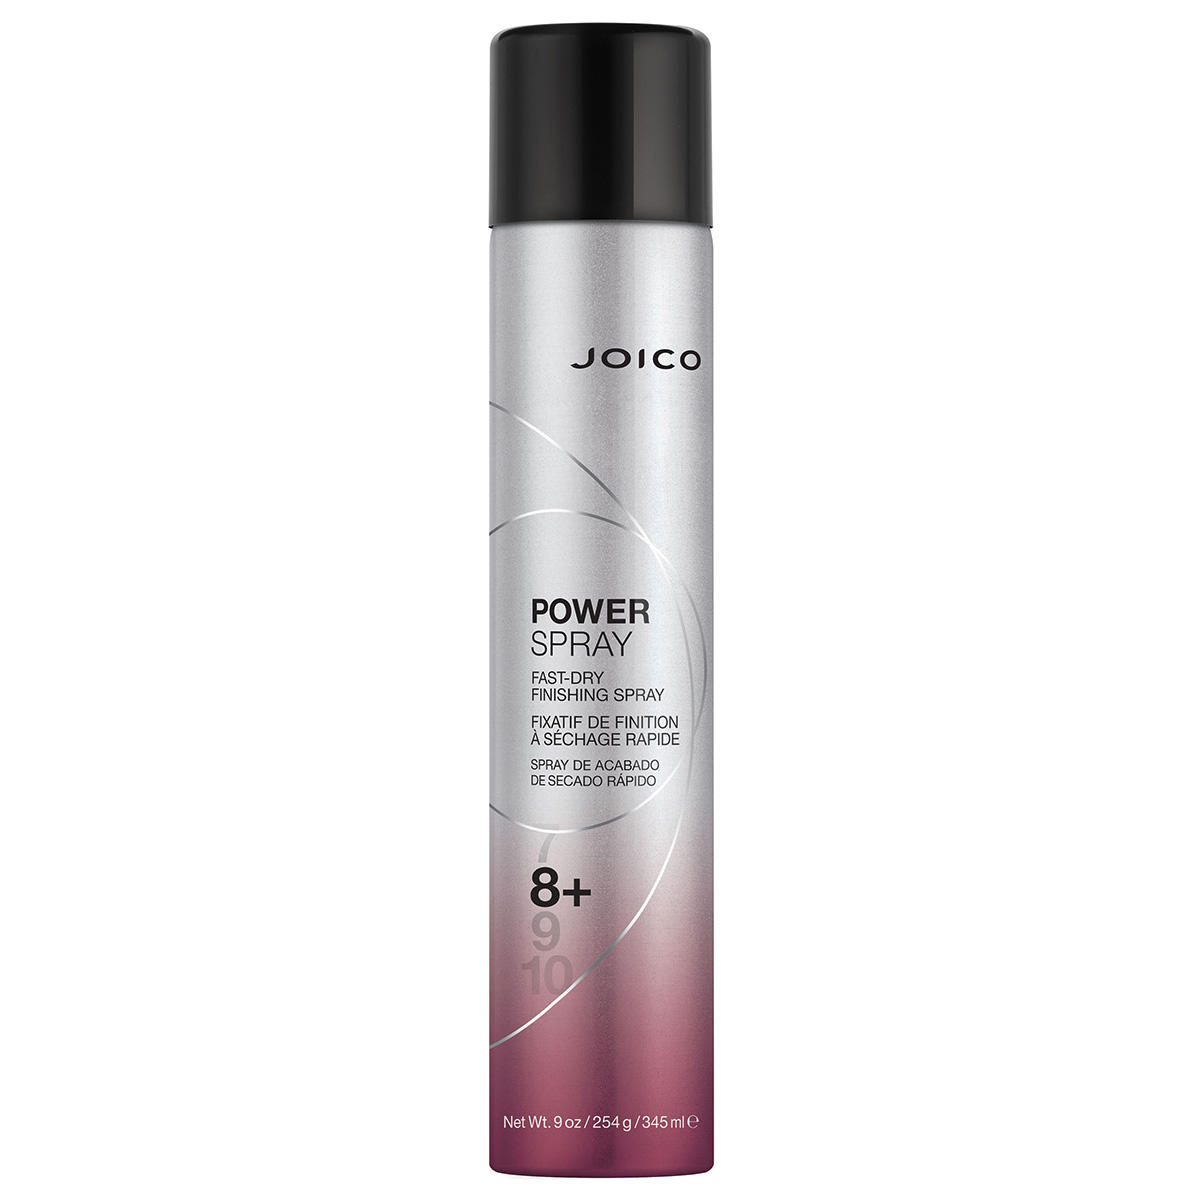 JOICO Power Spray Finishing Spray 345 ml - 1